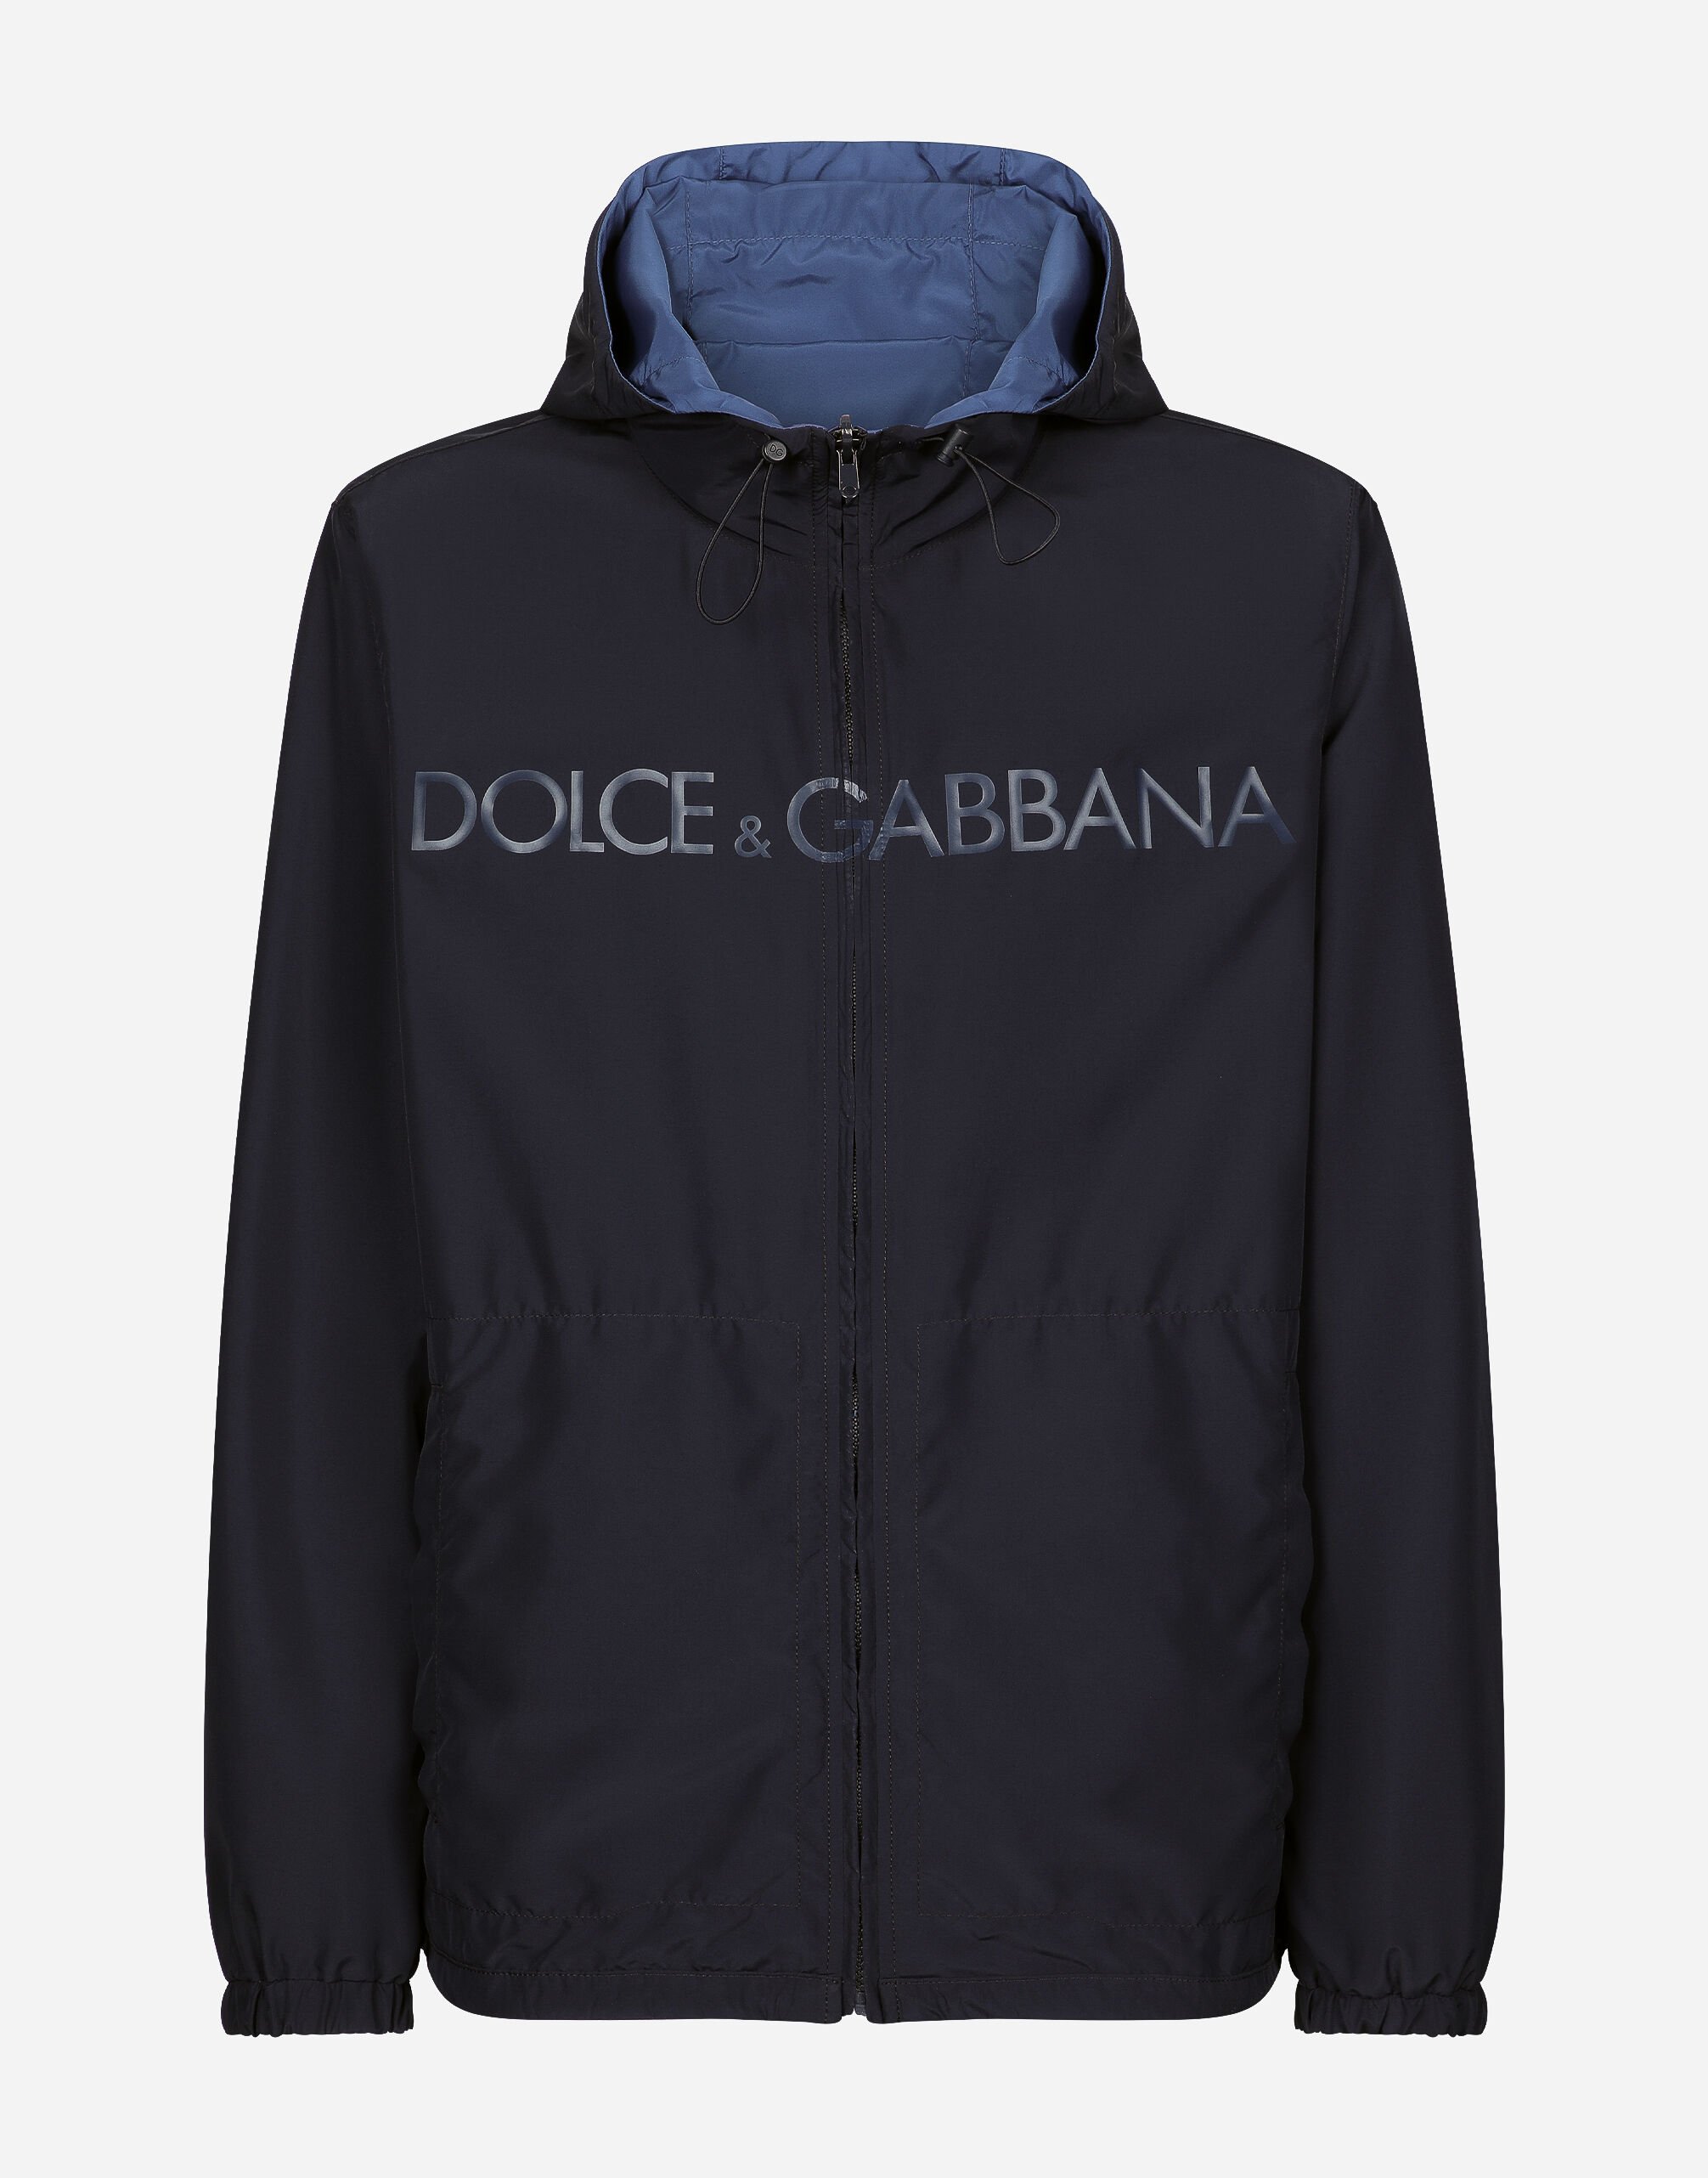 Dolce & Gabbana Reversible jacket with hood and logo Print G9AZDTFS6N5